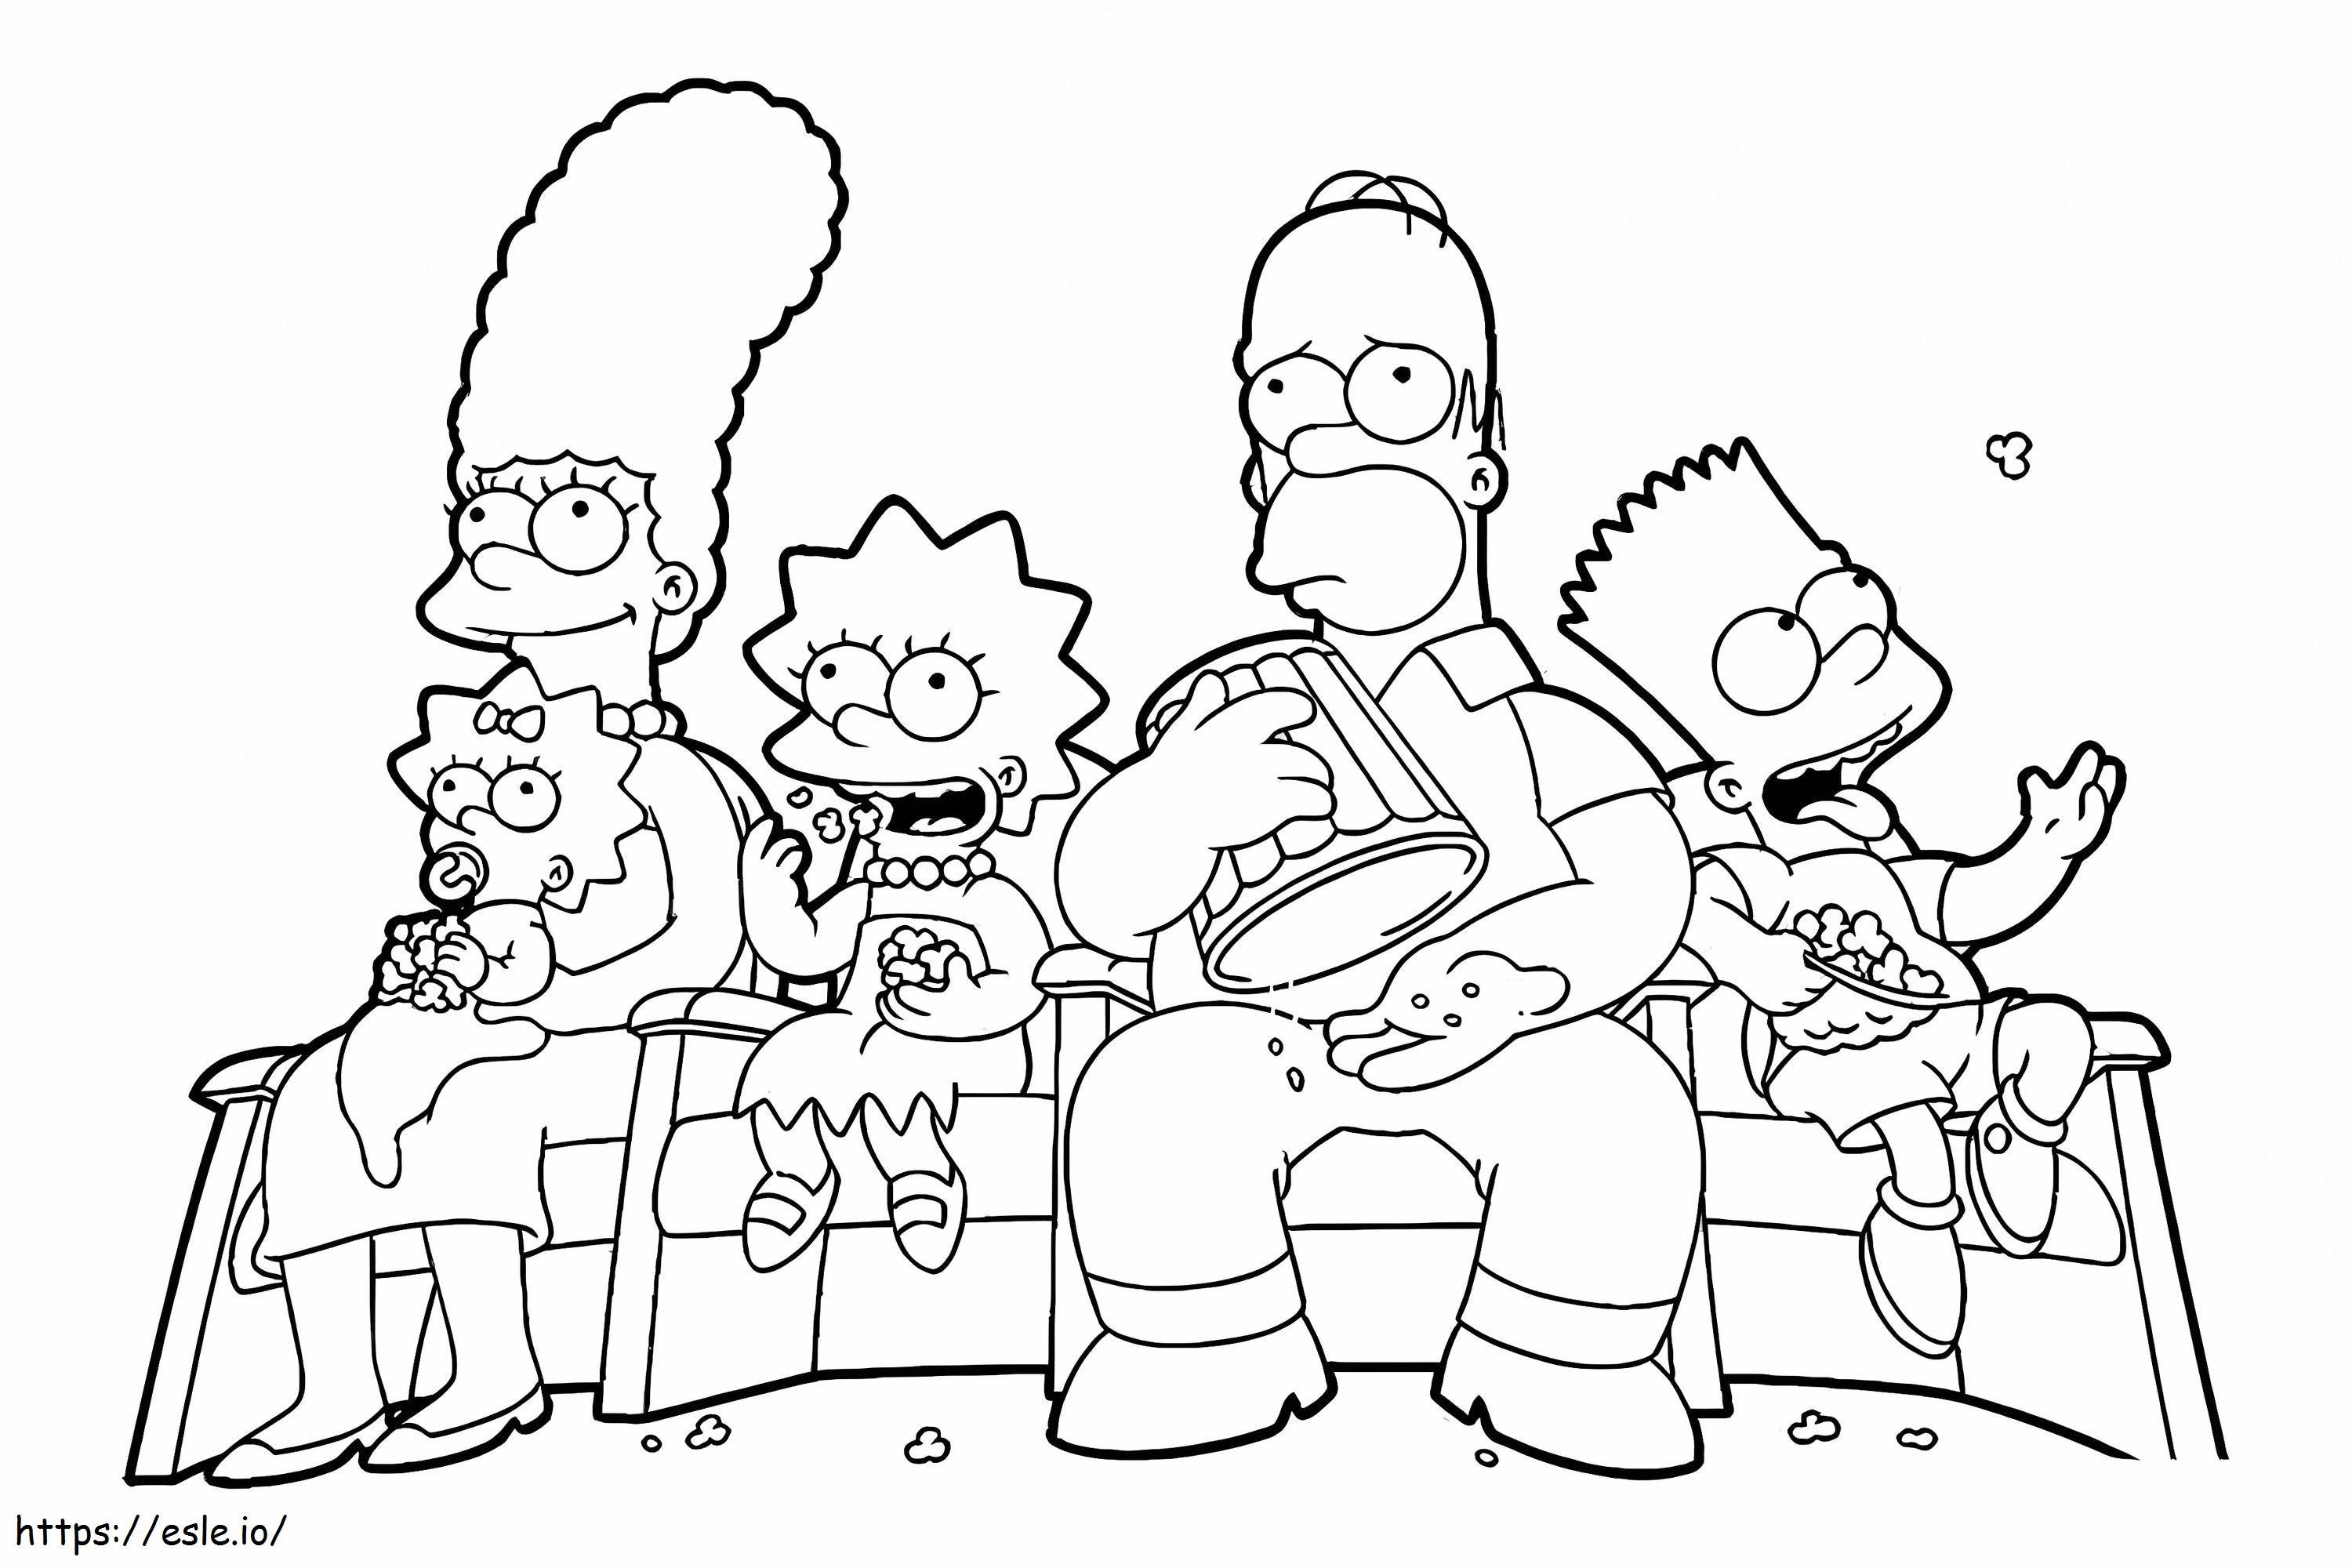 Simpsons-Familie schaut sich den Film an ausmalbilder